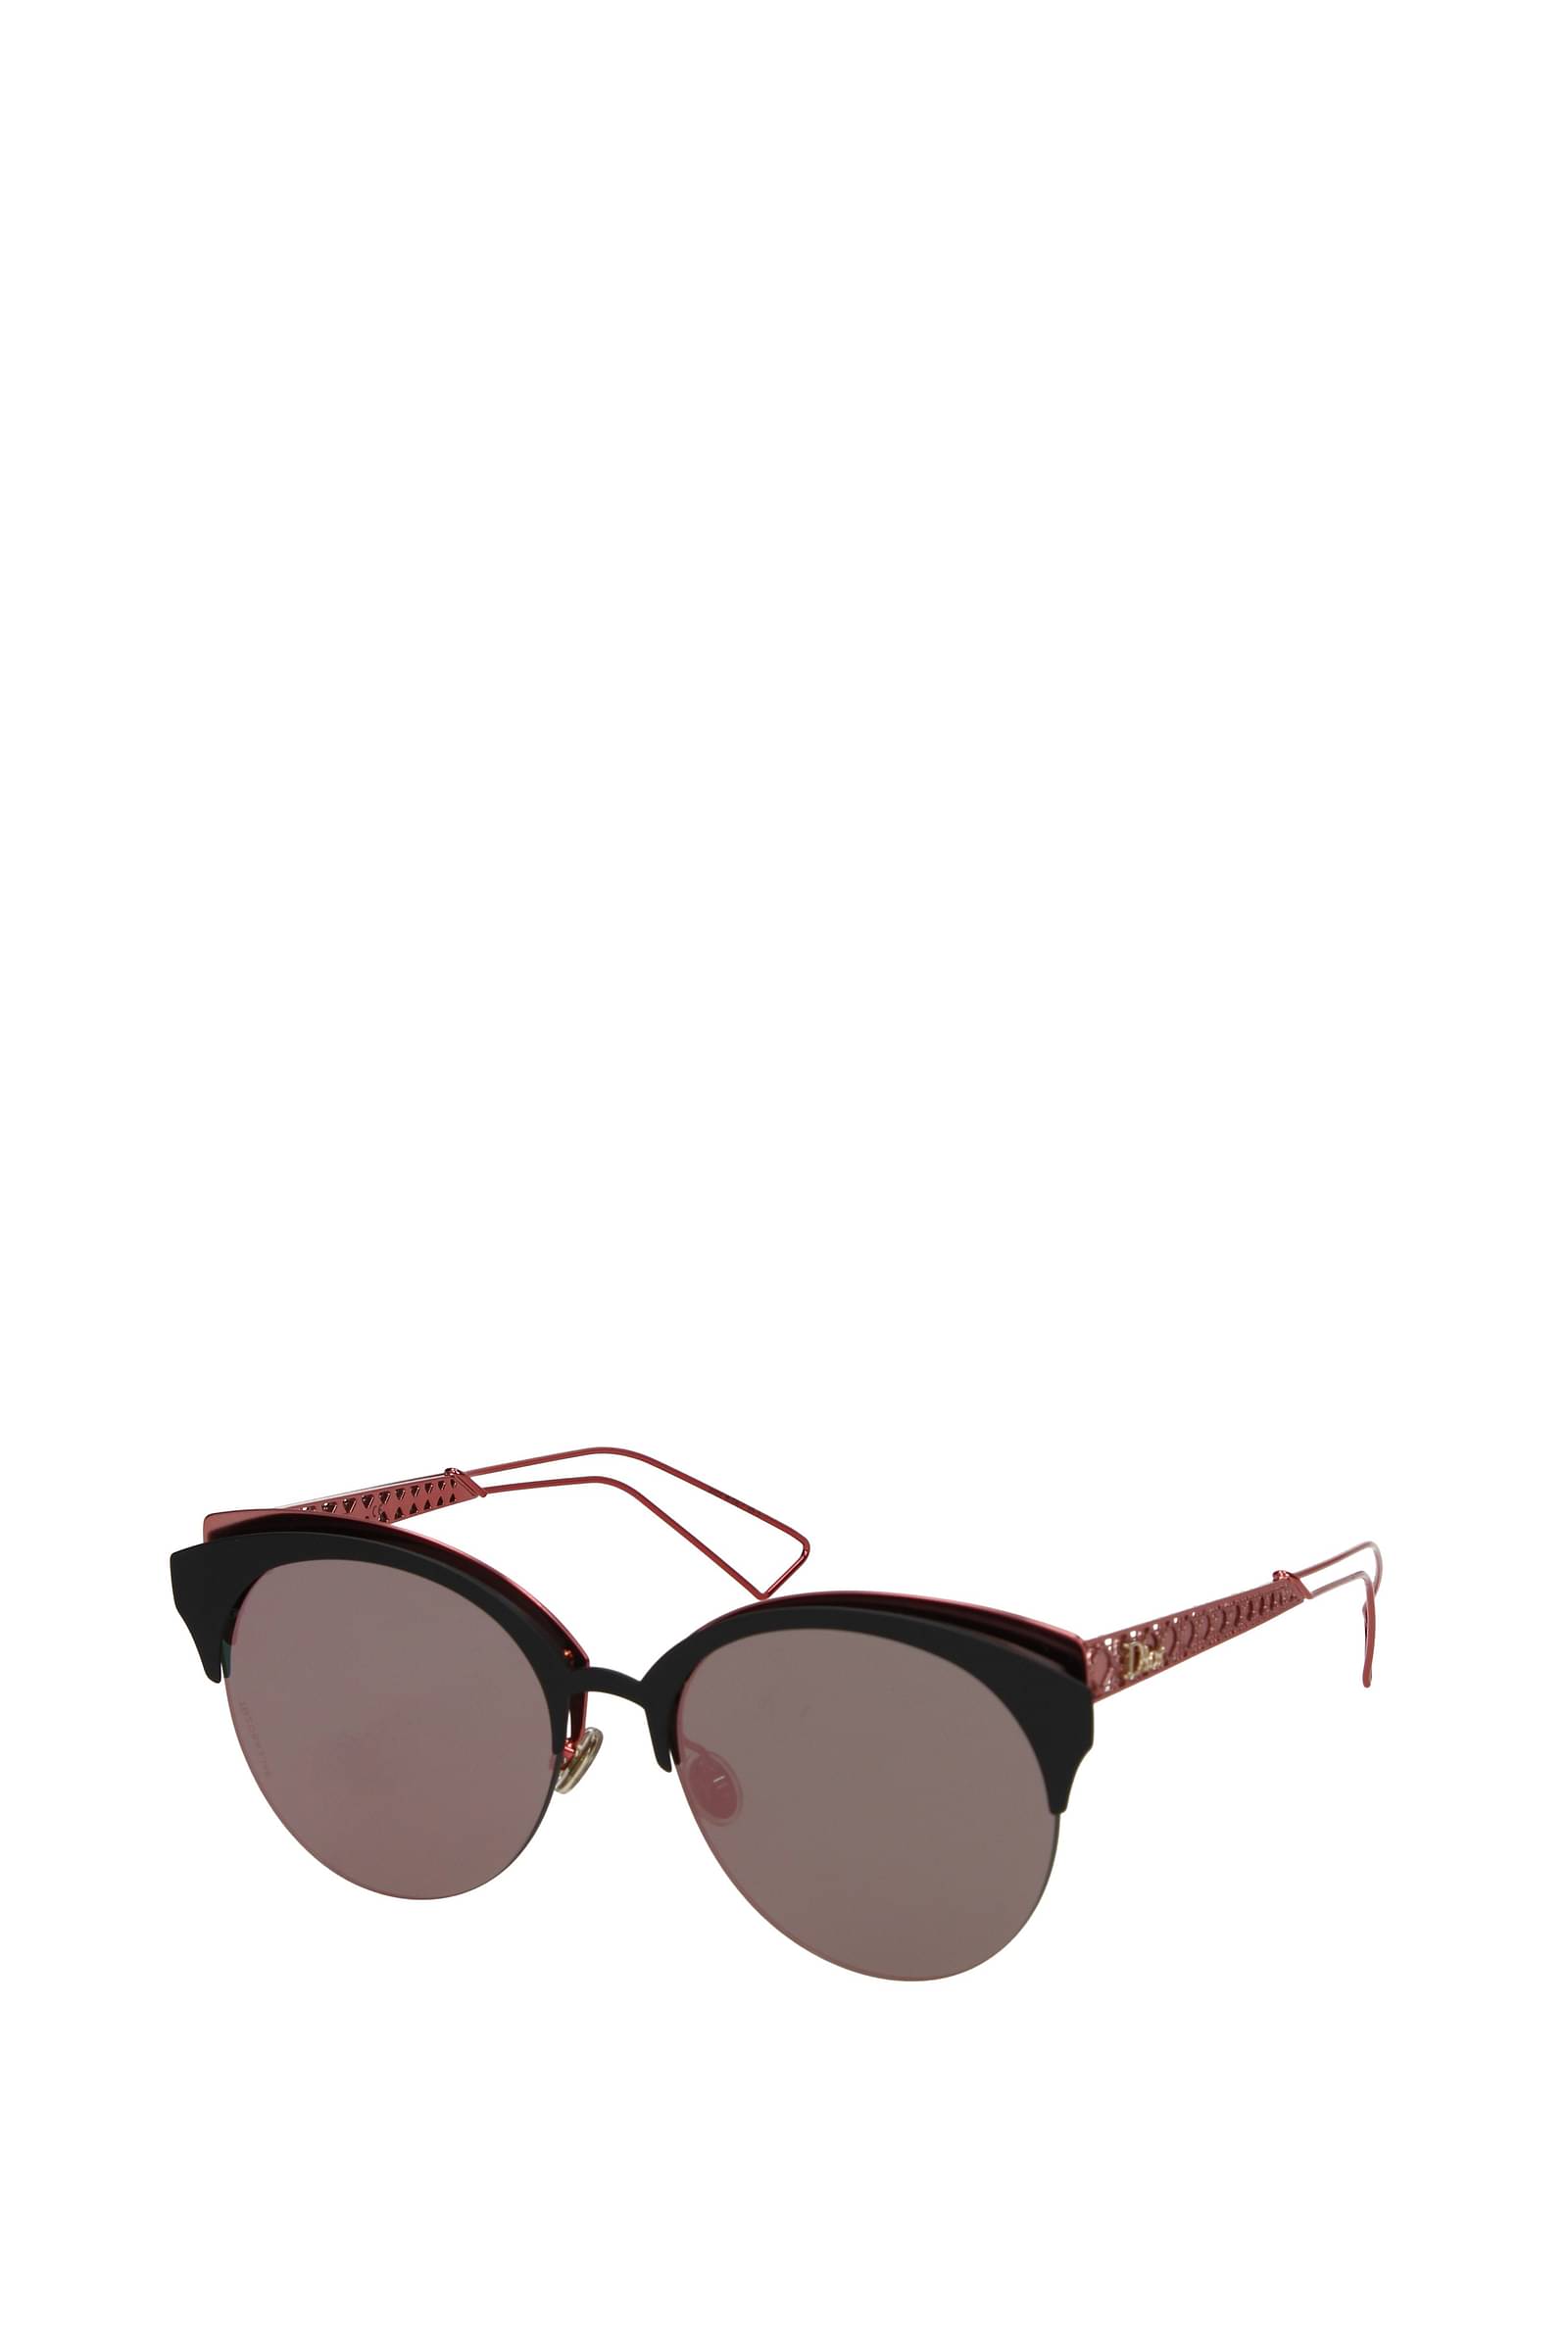 DiorSignature B7I Translucent Pink Butterfly Sunglasses  DIOR